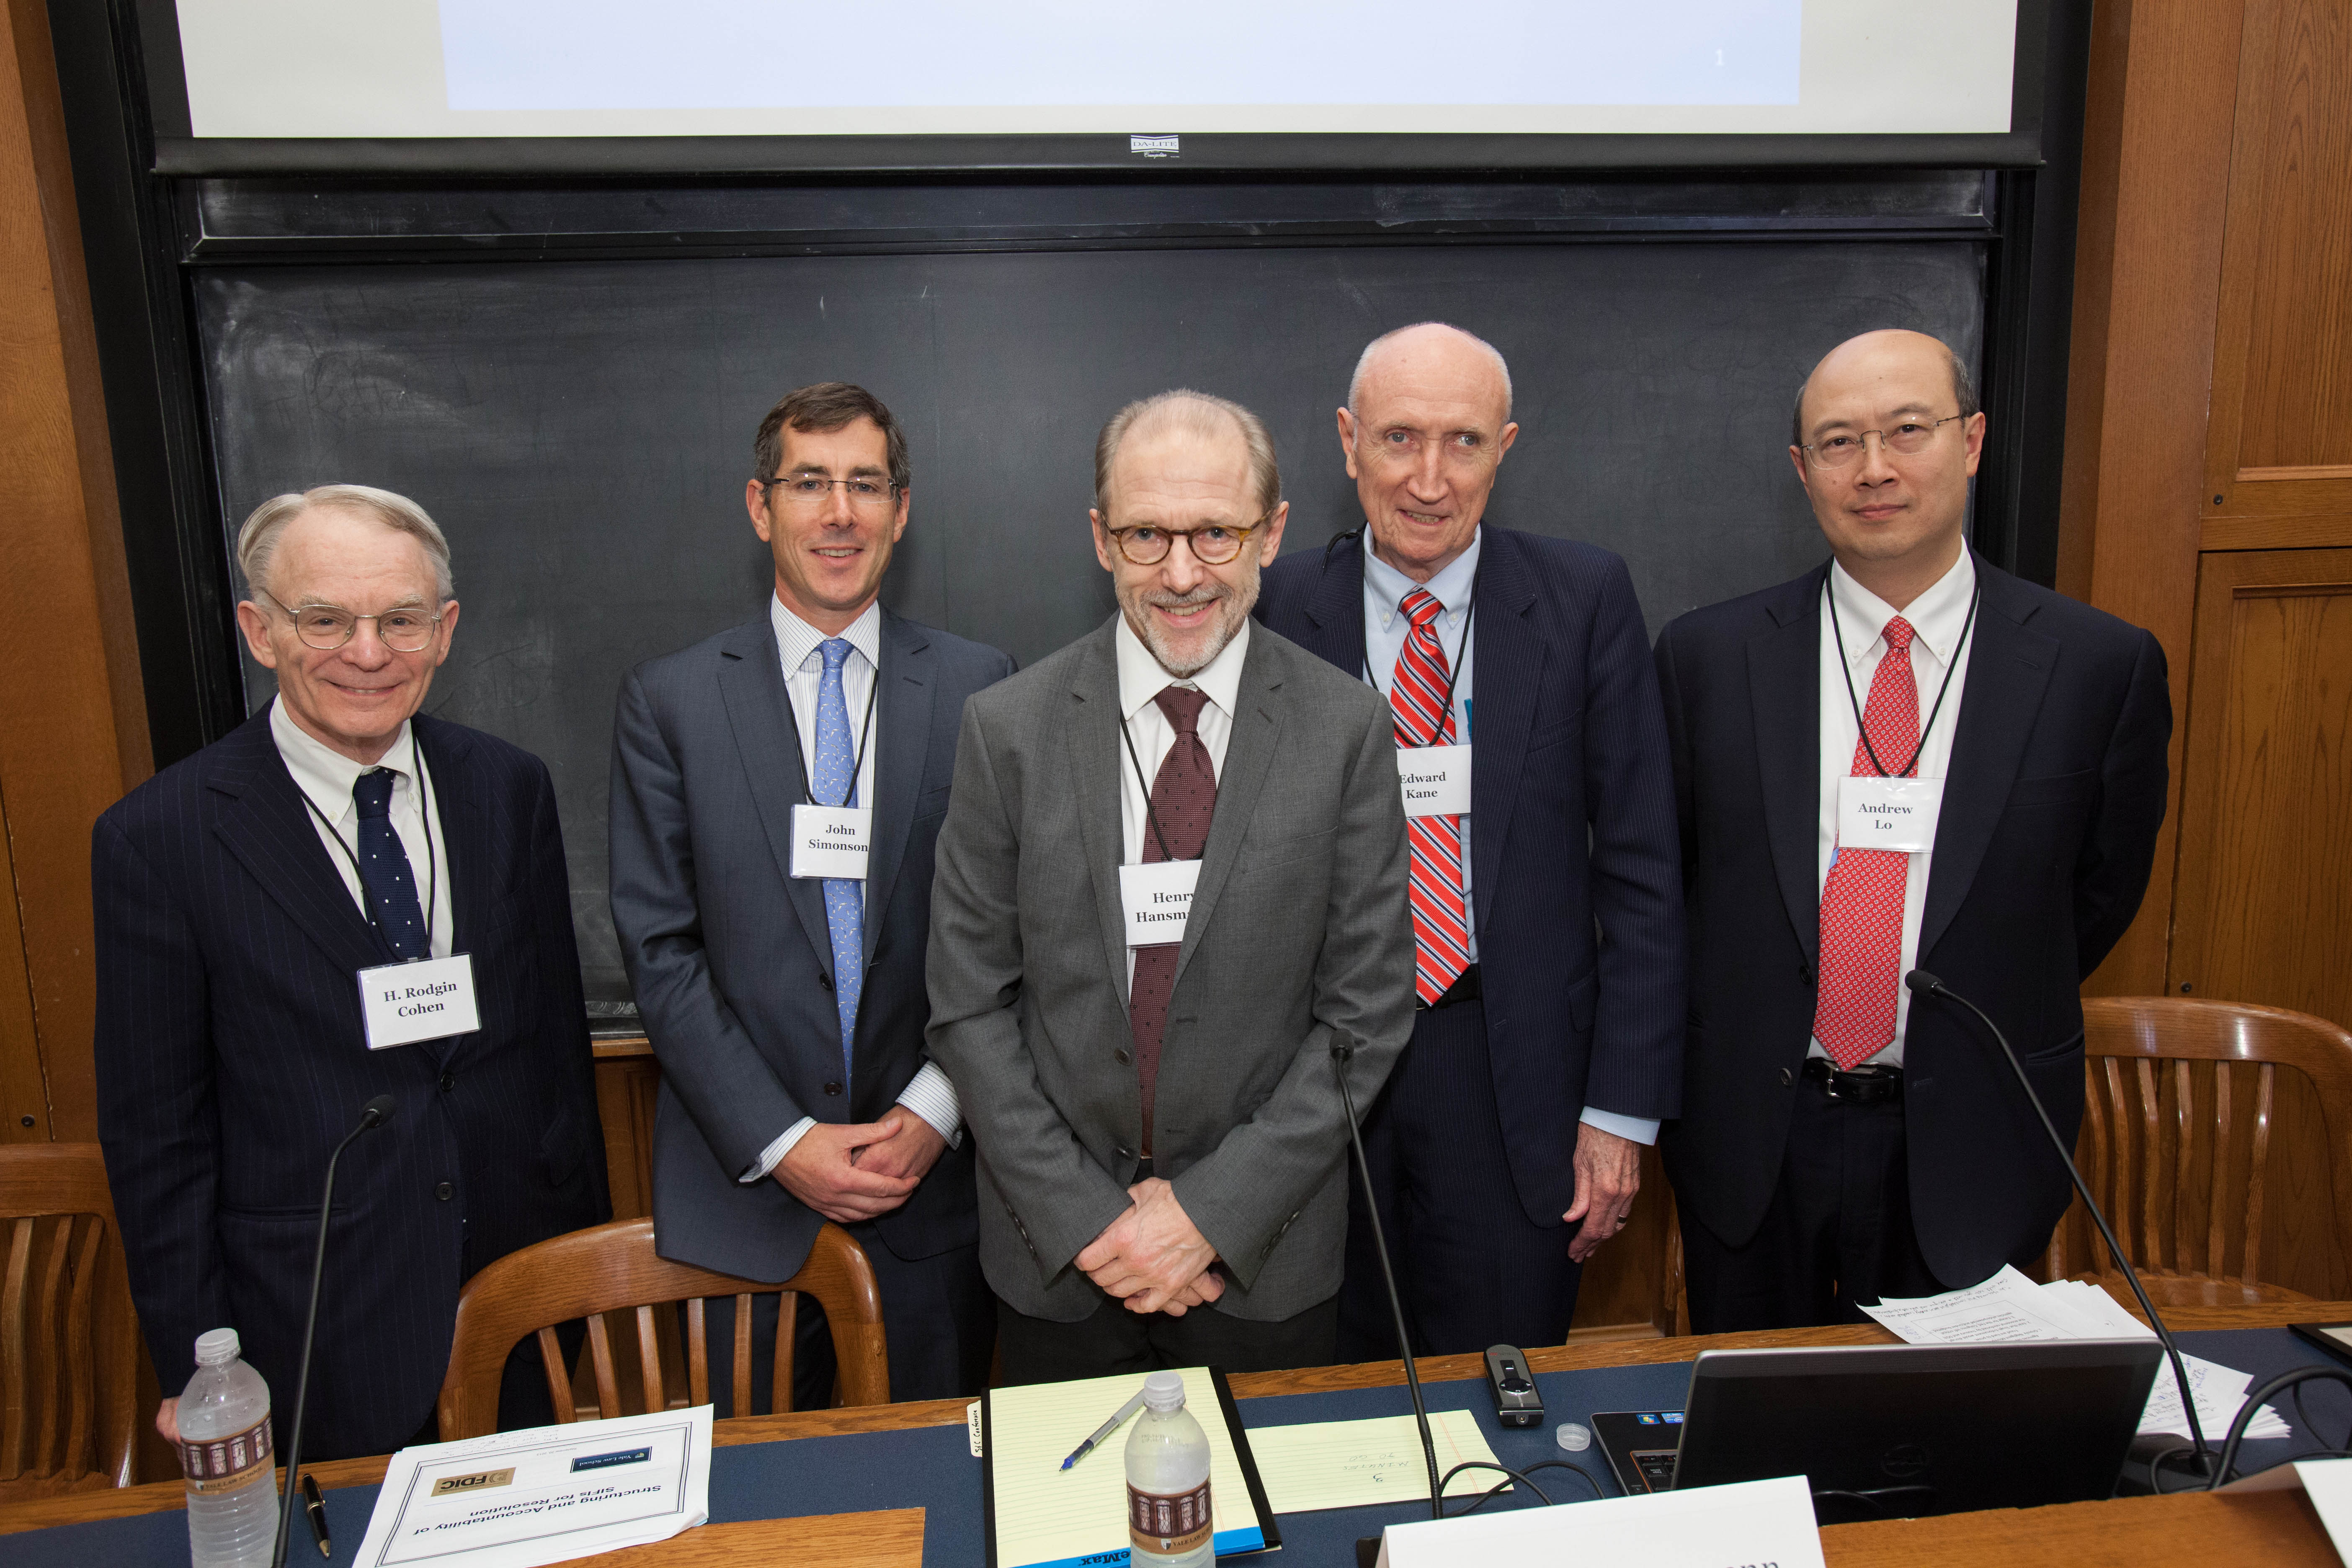 H. Rodgin Cohen, John F. Simonson, YLS Prof. Henry Hansmann ’74, Boston College Finance Prof. Edward J. Kane, and MIT Sloan Prof. Andrew W. Lo